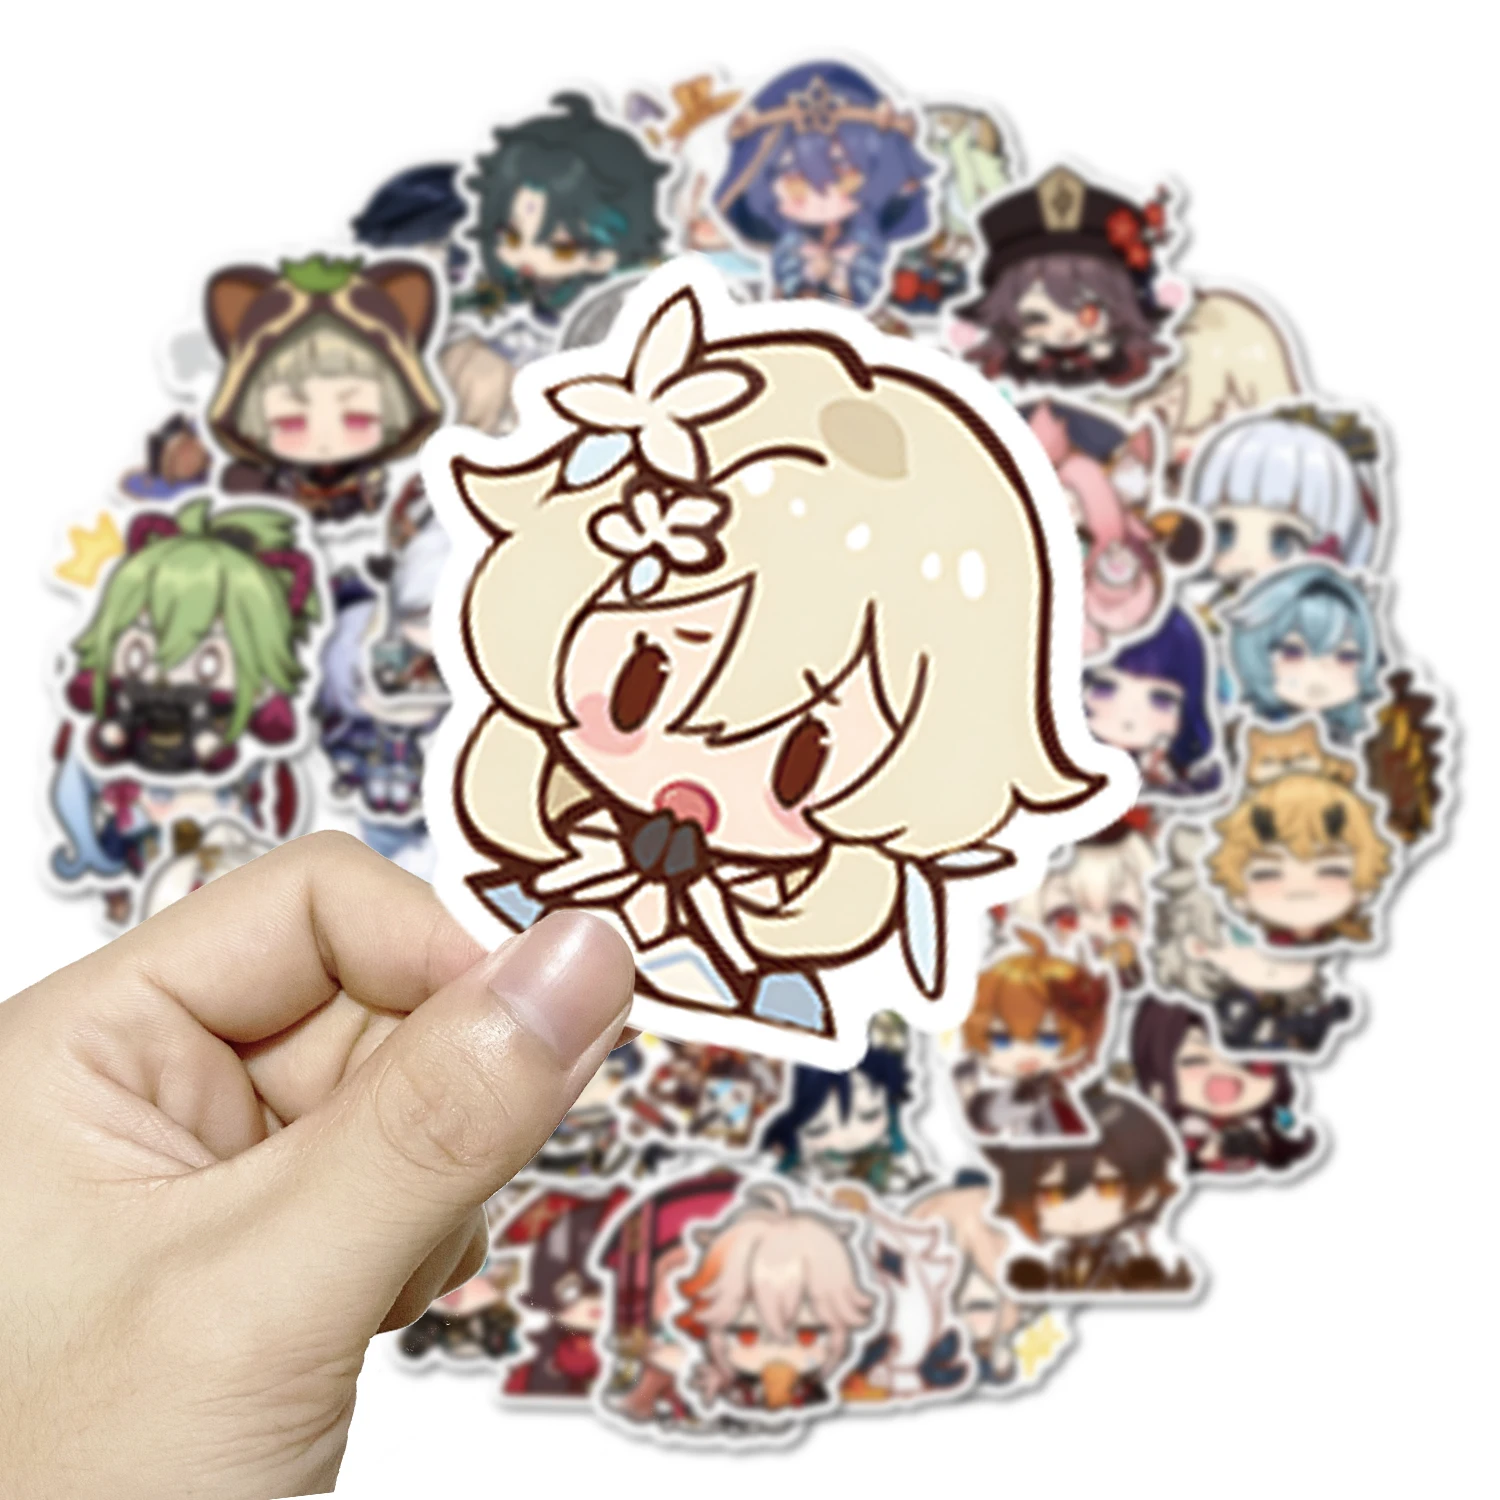 Anime Meme Stickers | Unique Designs | Spreadshirt